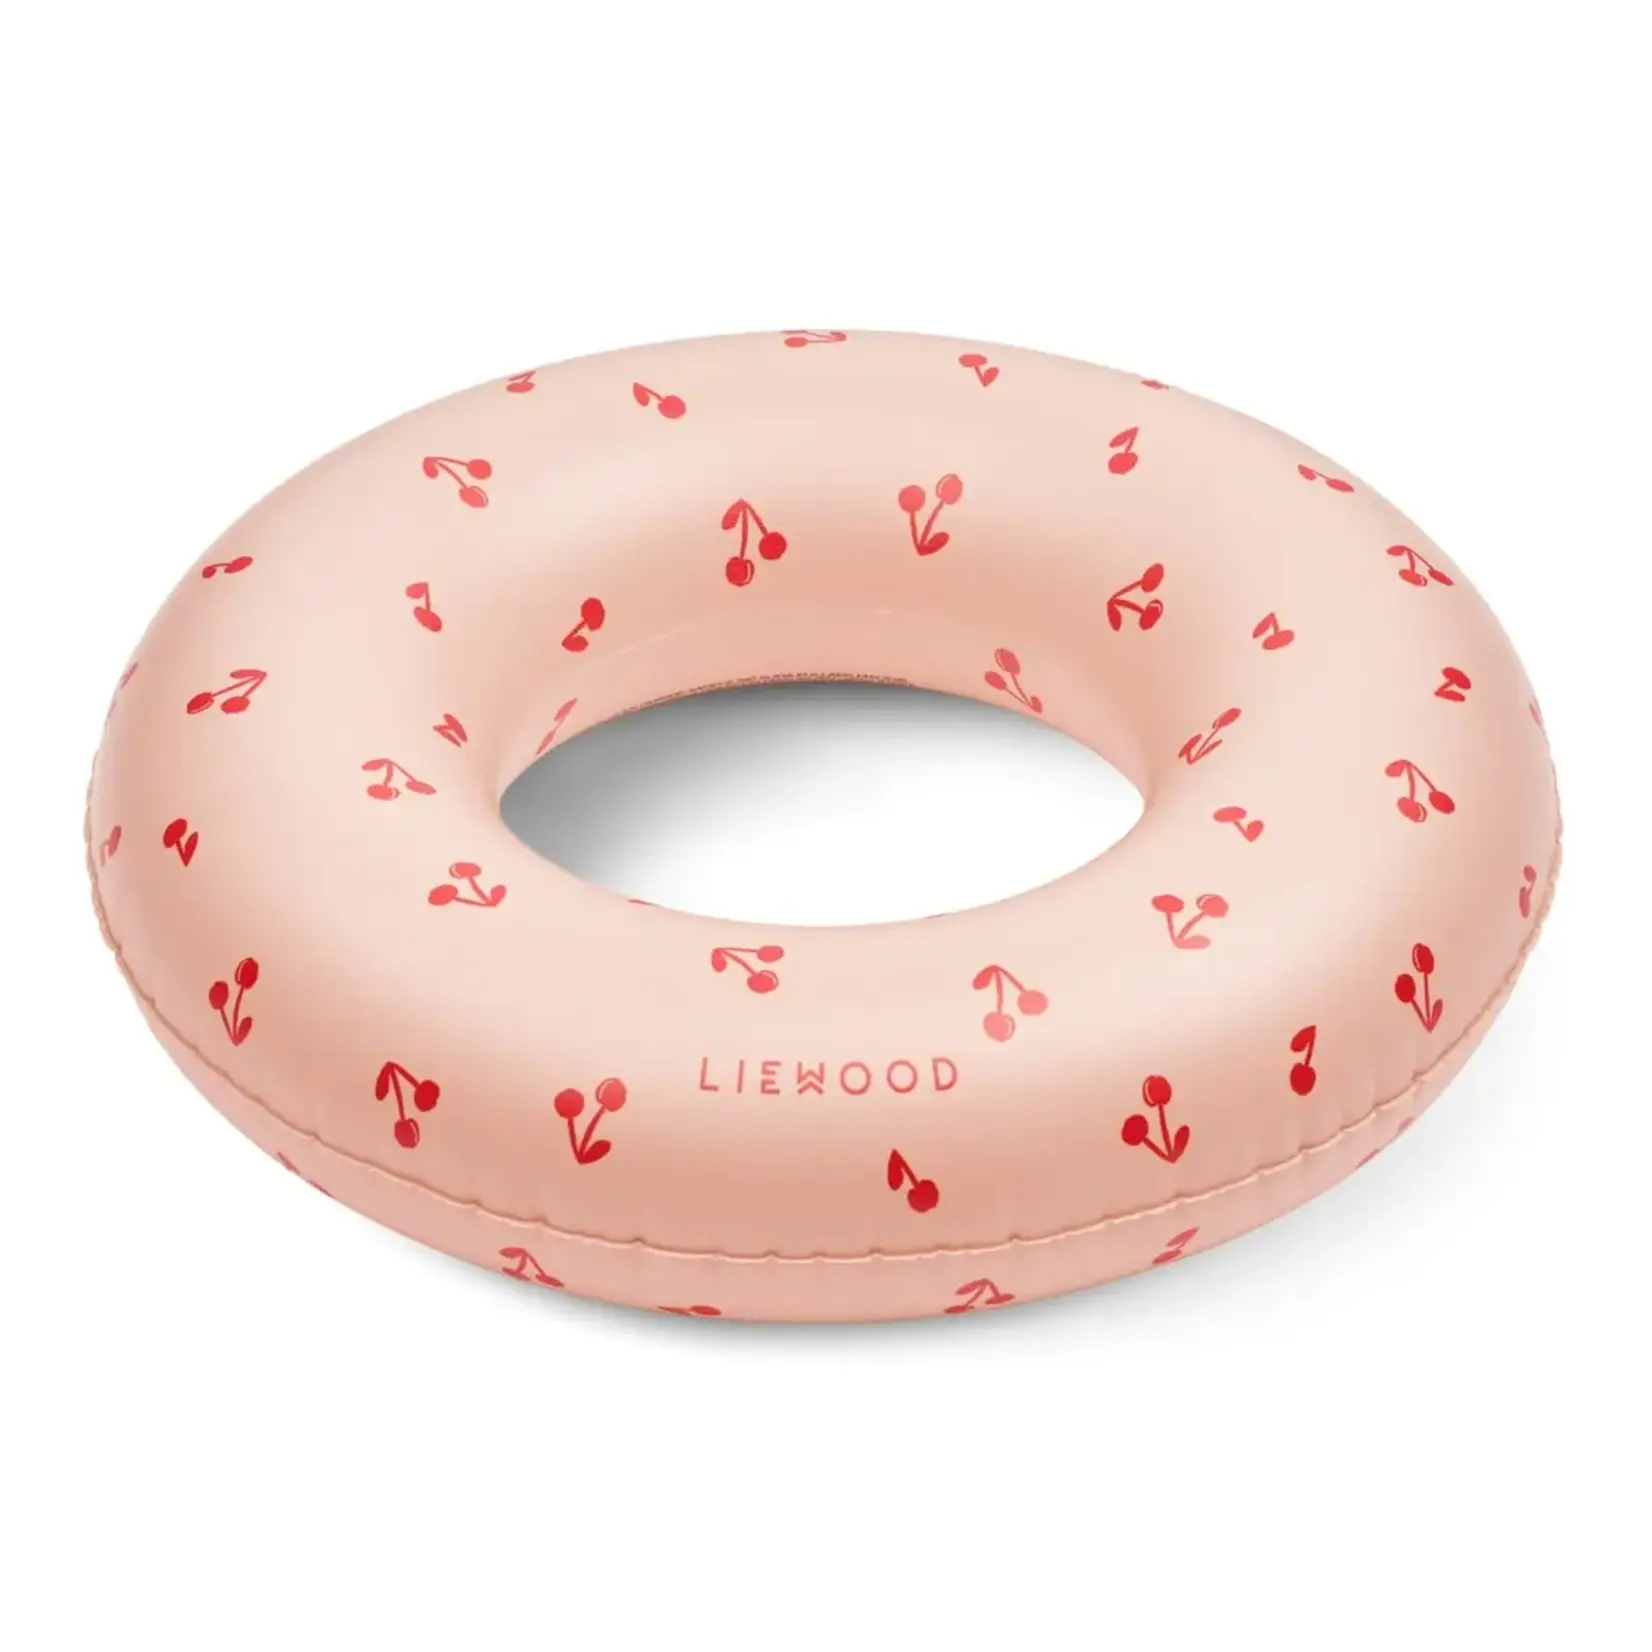 Liewood Liewood - Baloo Printed Swim Ring - Cherries Apple blossom